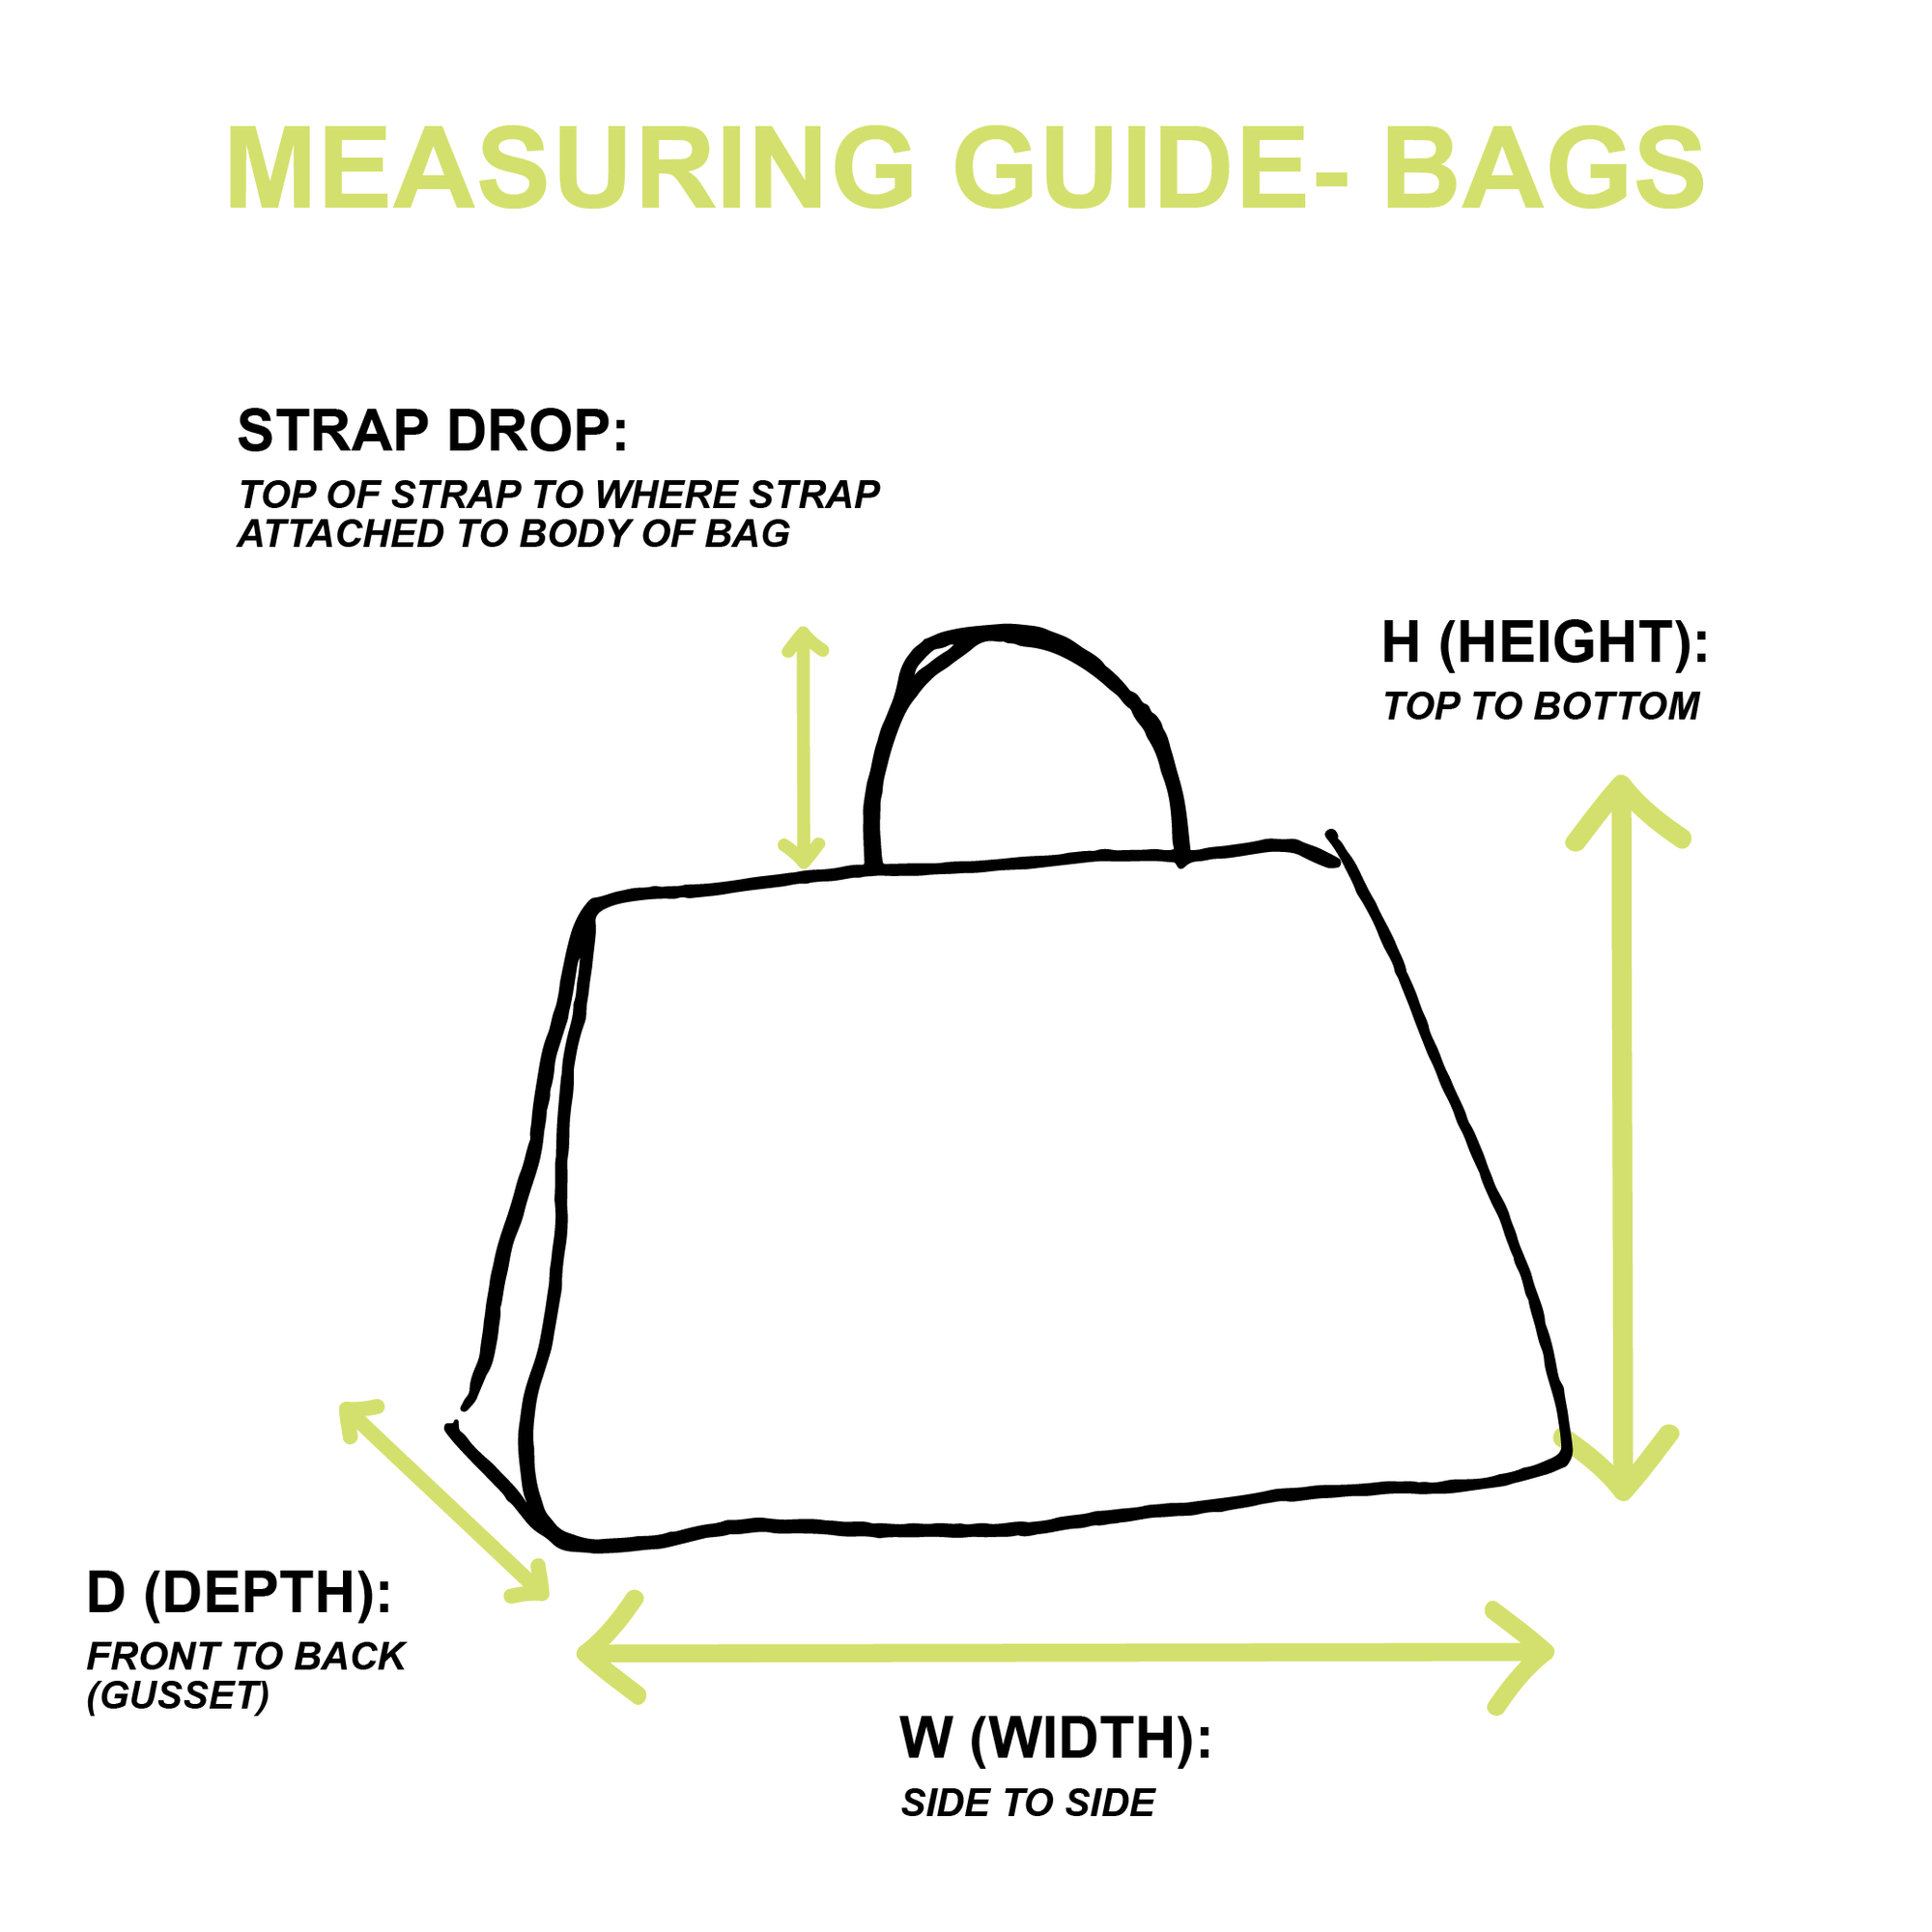 Versace Green Mini Safety Pin Bag - Handbags